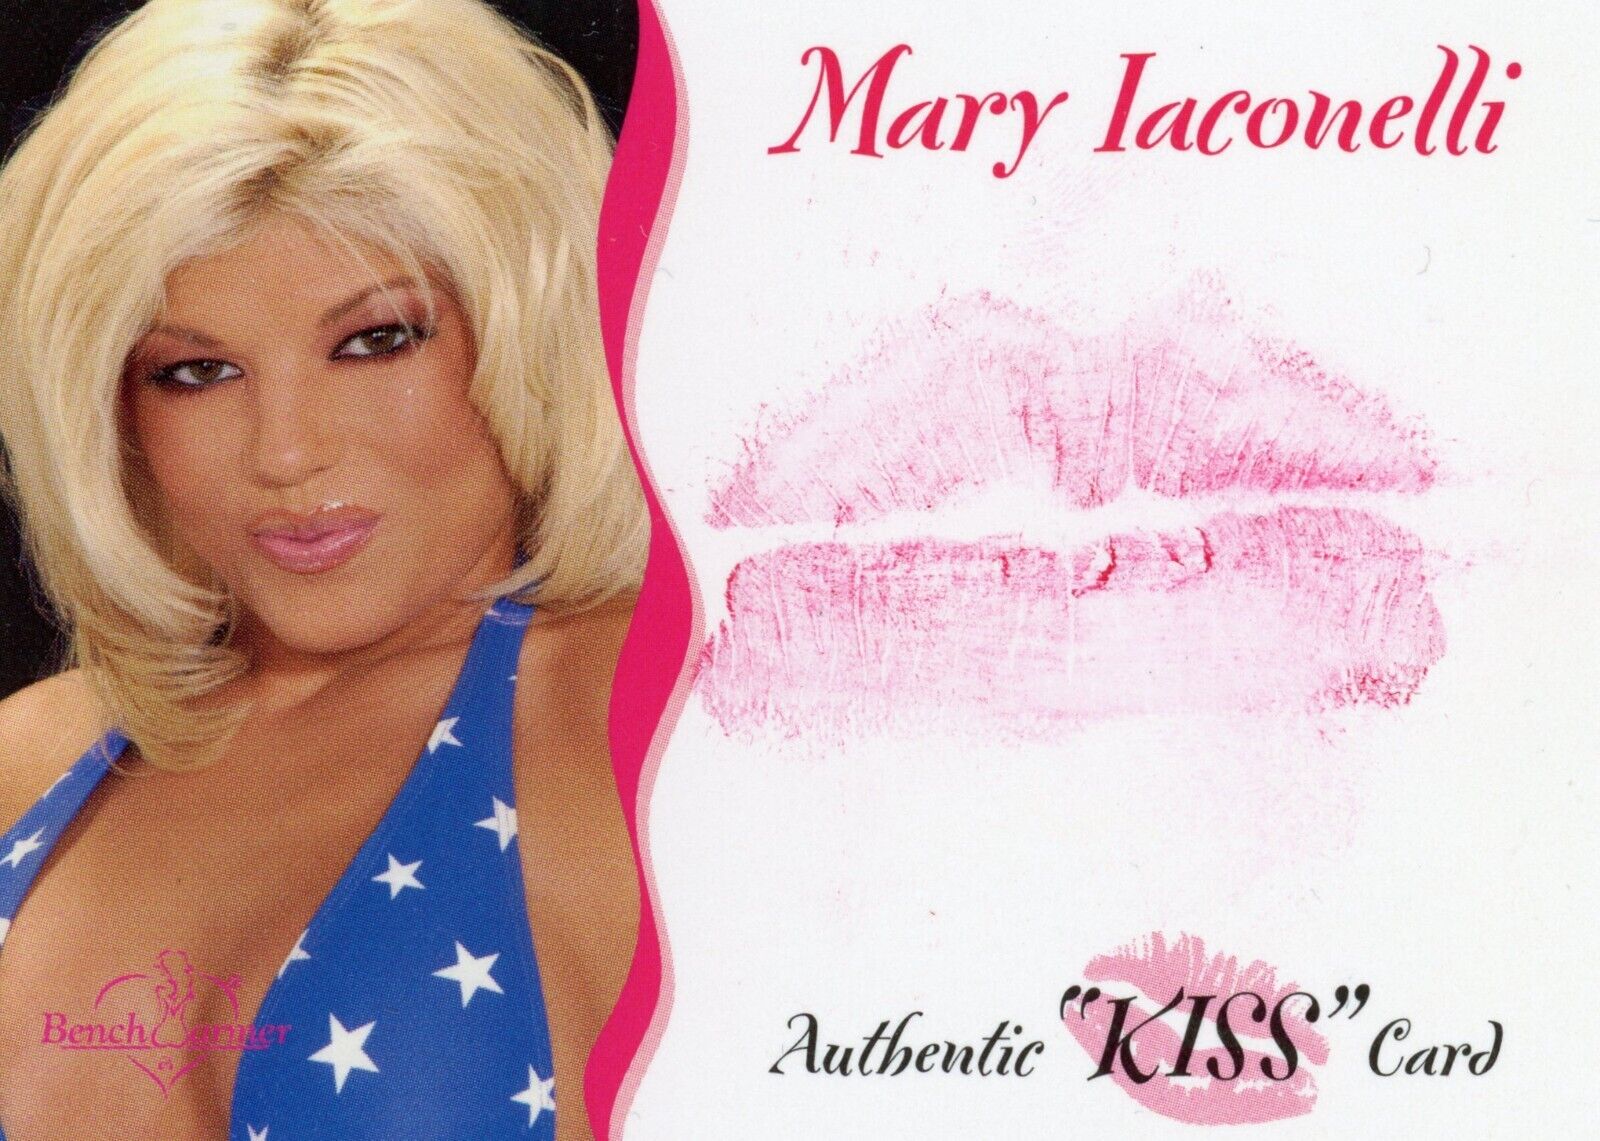 2004 BENCHWARMER MARY IACONELLI KISS